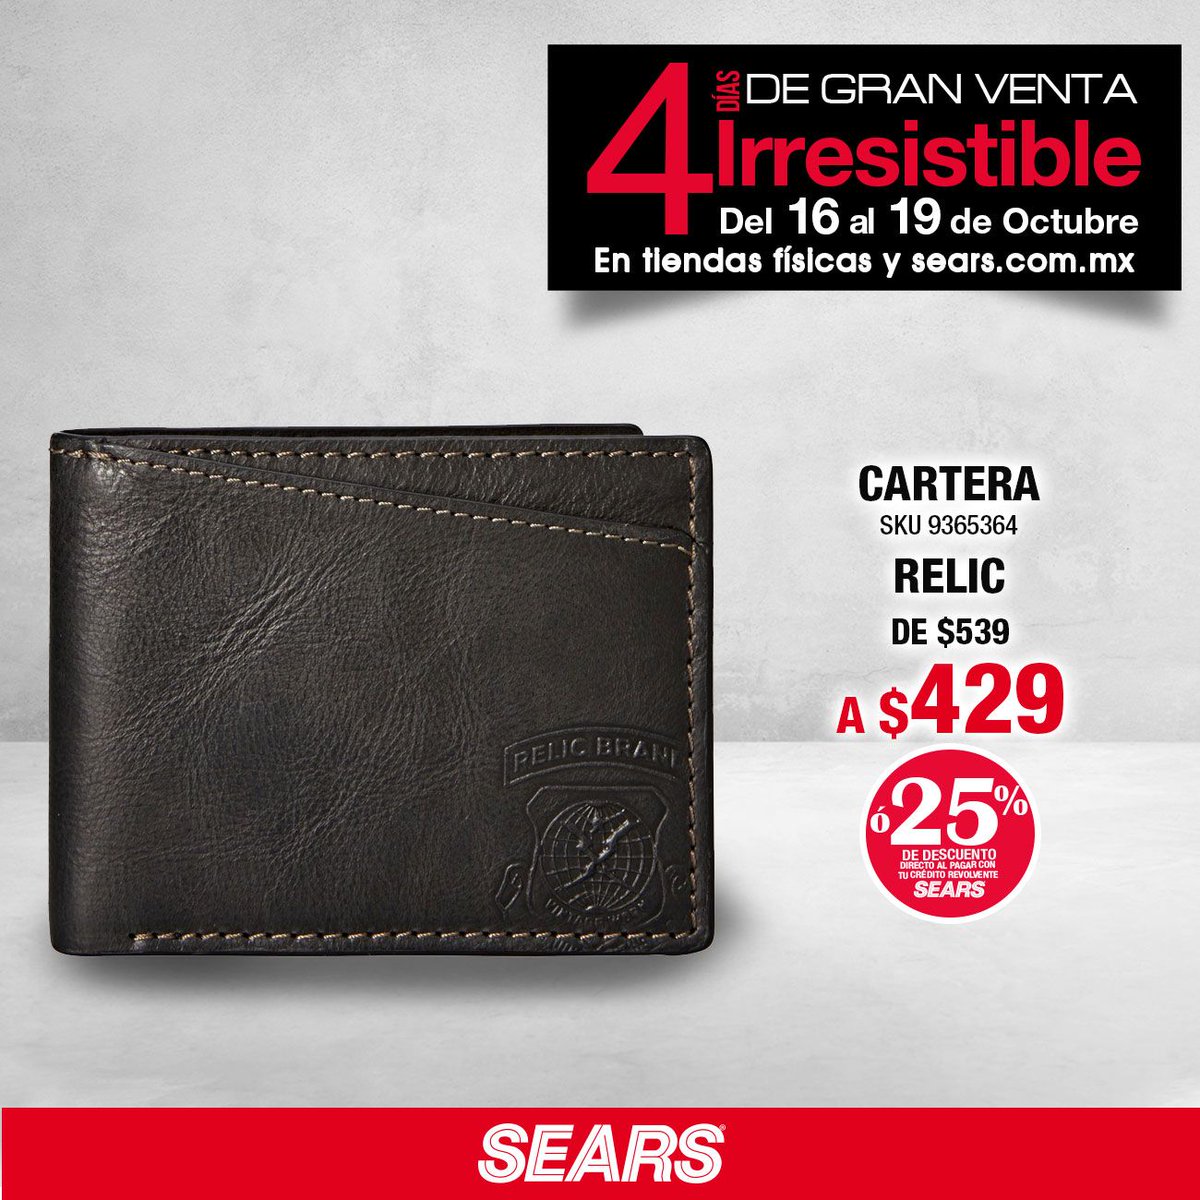 Sears México on Twitter: "¡Adquiere esta cartera #Relic a un magnífico precio! Aprovecha esta promoción dando clic aquí 👉https://t.co/eI0RI3ZD2J Consulta las bases de promoción aquí: https://t.co/tV5FYjfjJE https://t.co/wT0HkEKGVE" / Twitter